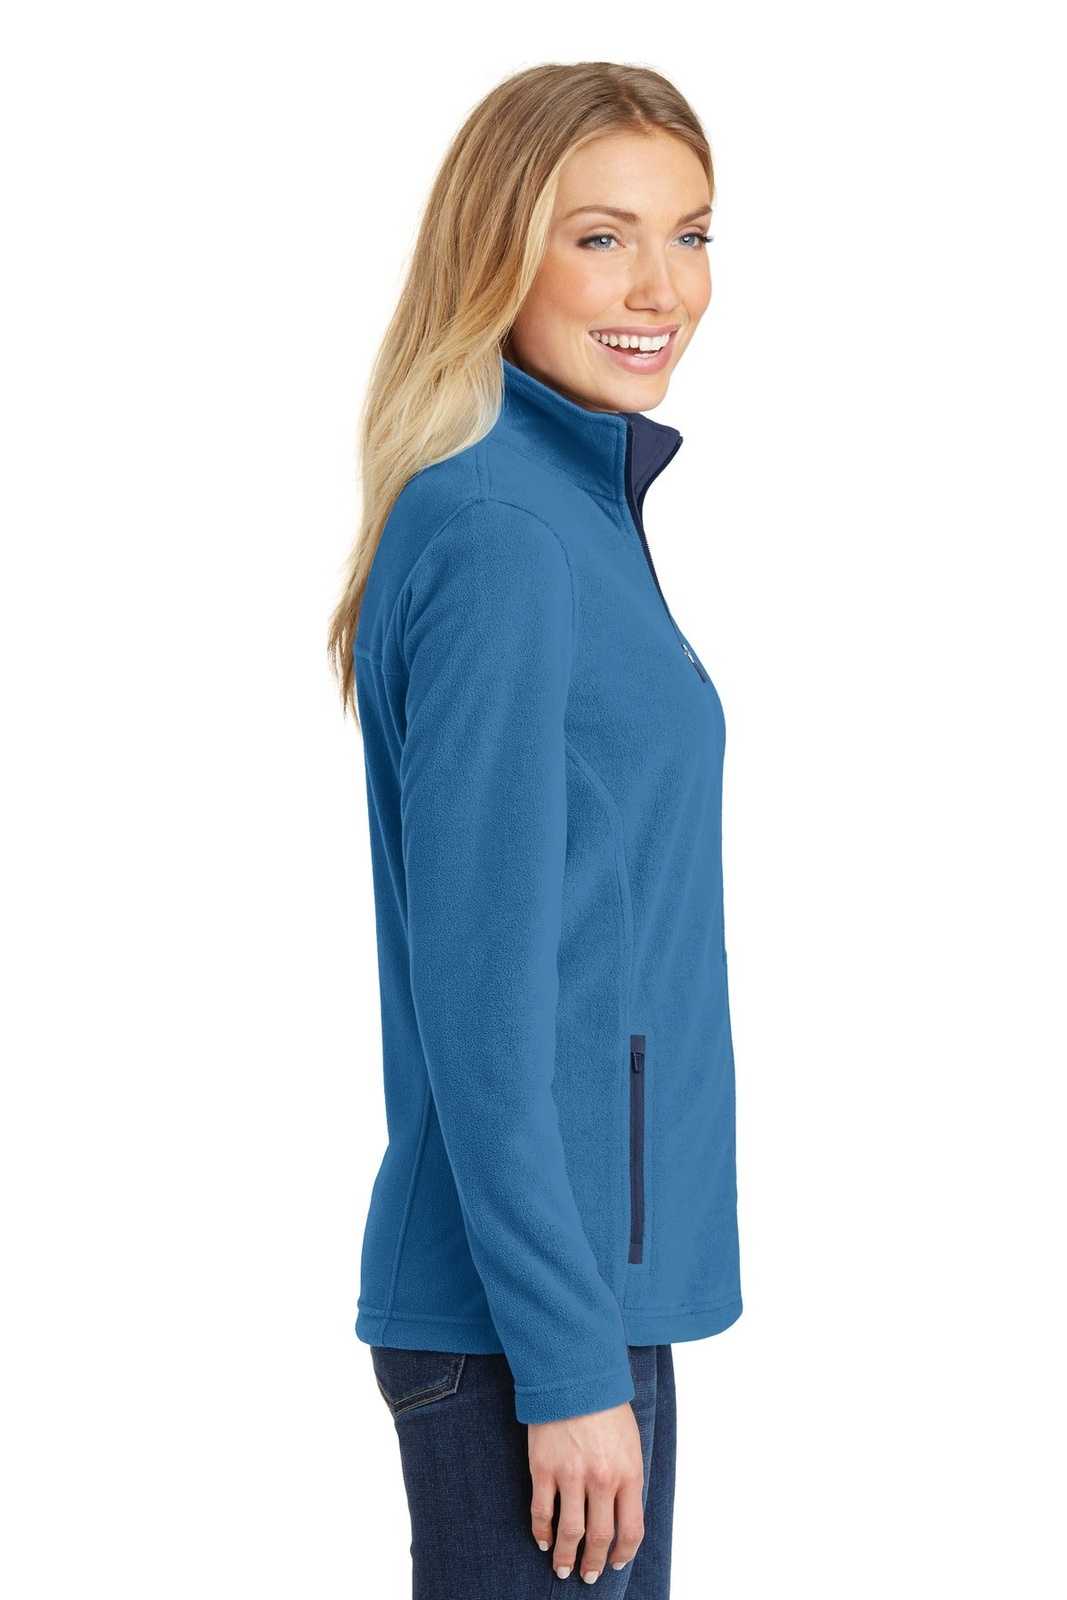 Port Authority L233 Ladies Summit Fleece Full-Zip Jacket - Regal Blue Dress Blue Navy - HIT a Double - 3